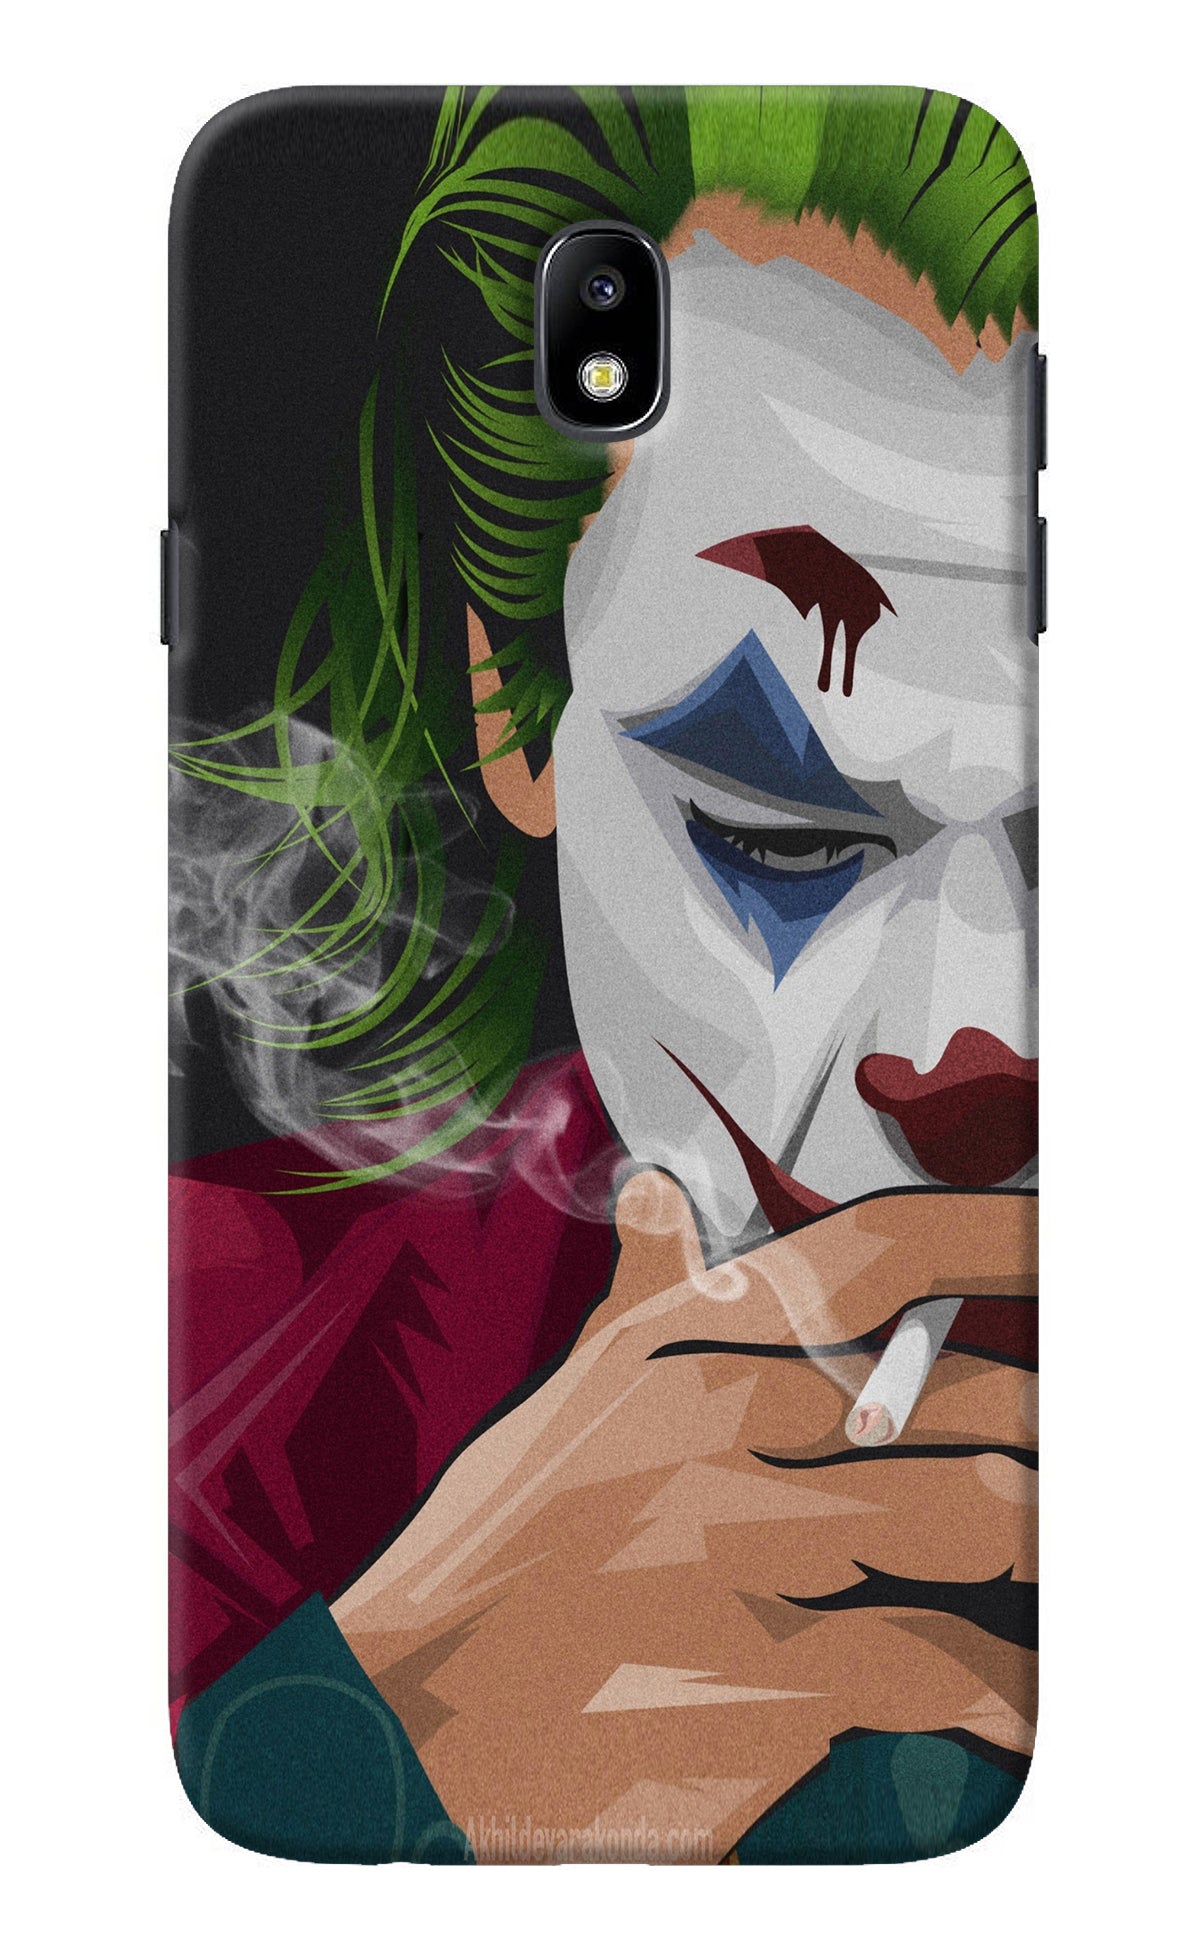 Joker Smoking Samsung J7 Pro Back Cover